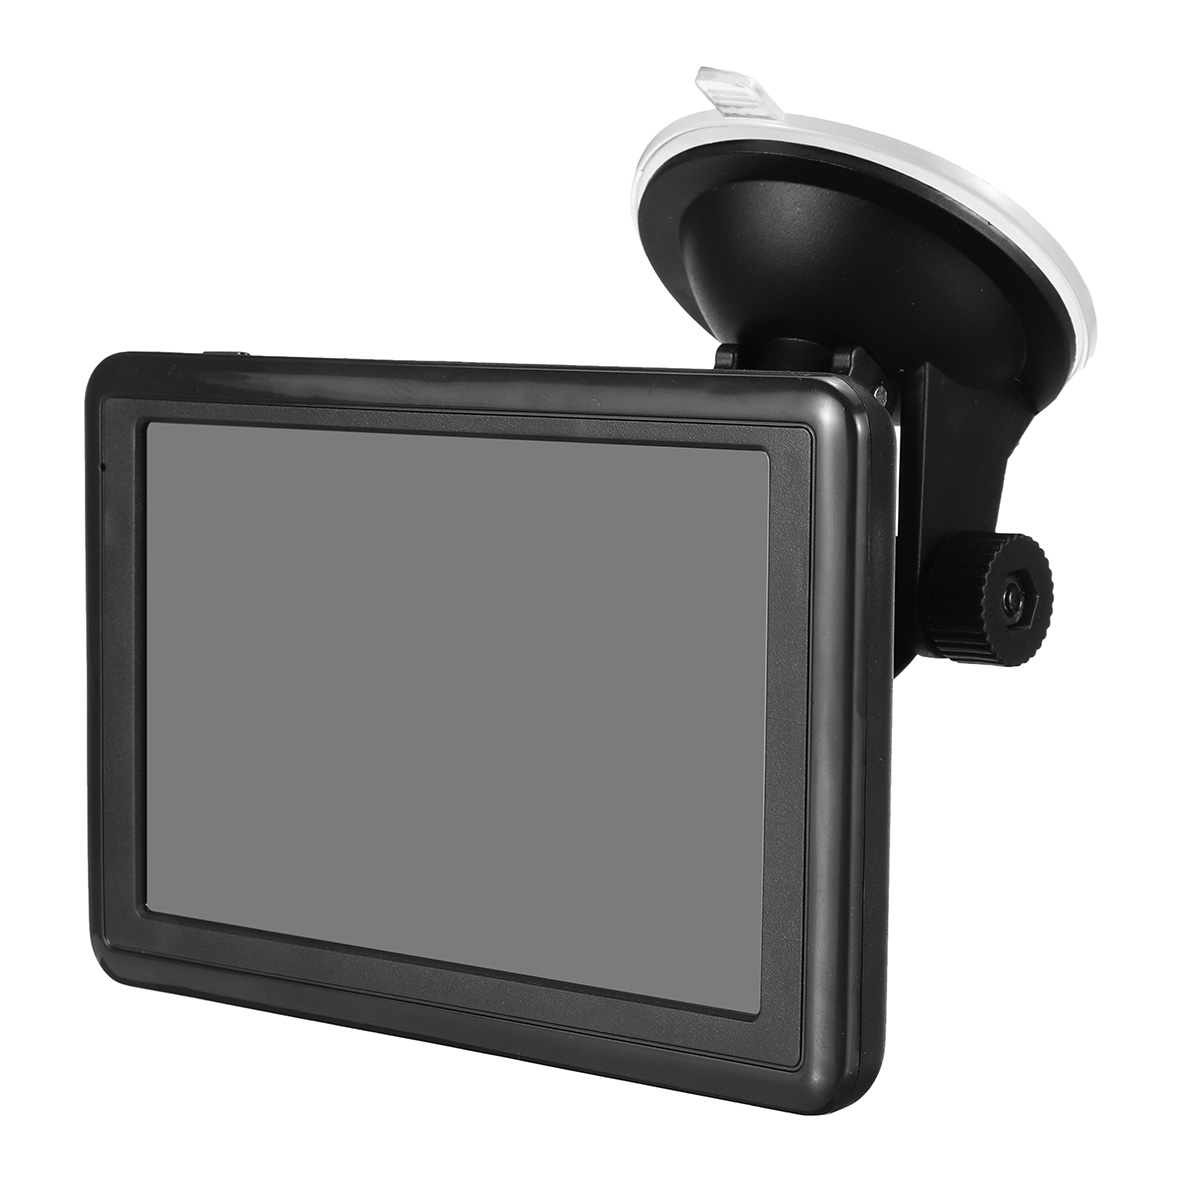 5-inch-Touch-Screen-HD-Car-GPS-Navigation-8GB128MB-FM-US-Canada-Europe-Southeast-Asia-Australia-Map--1811140-7